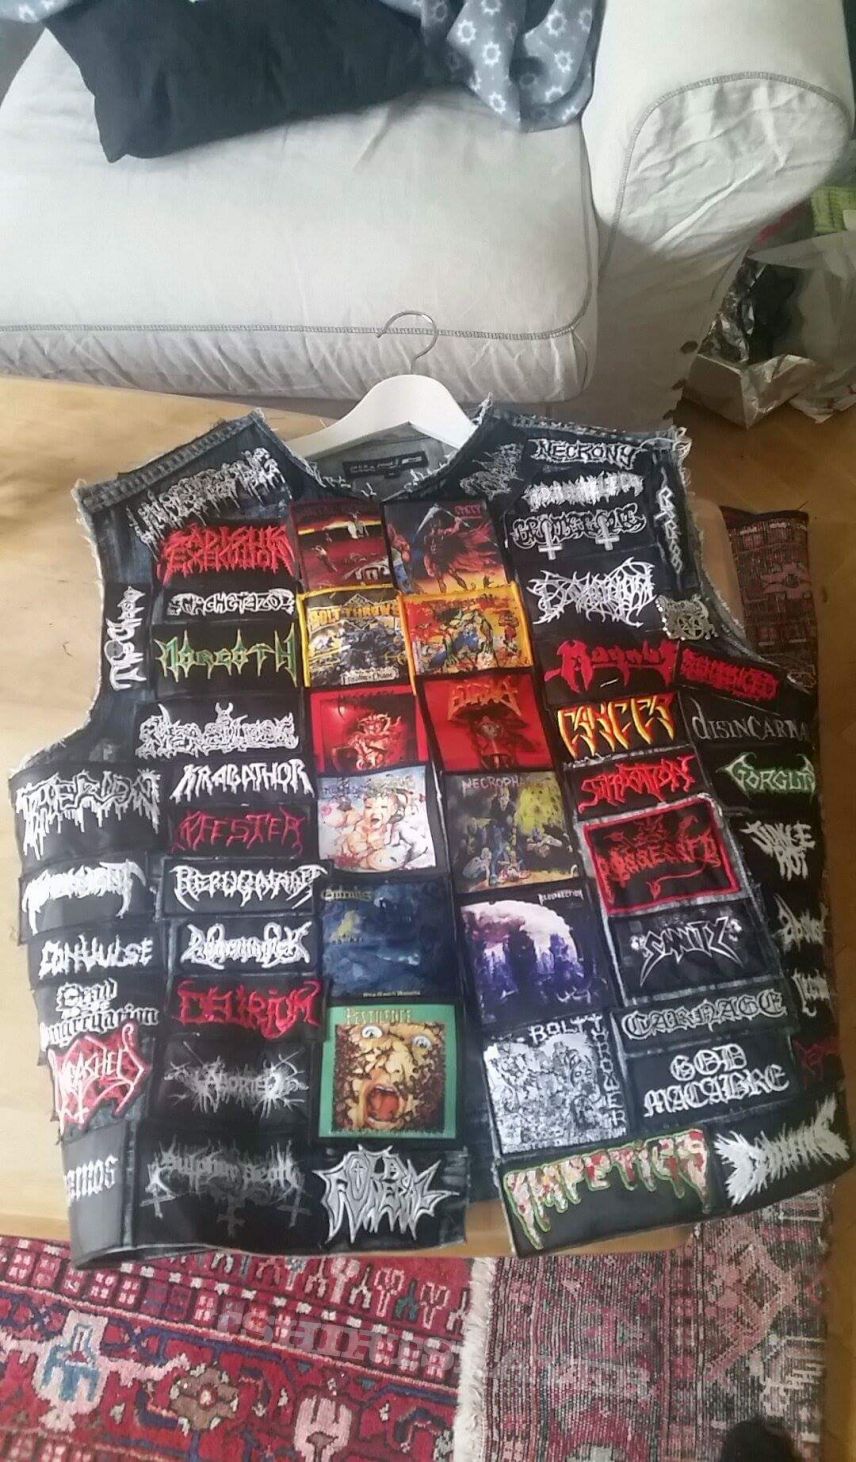 Aborted Death metal jacket